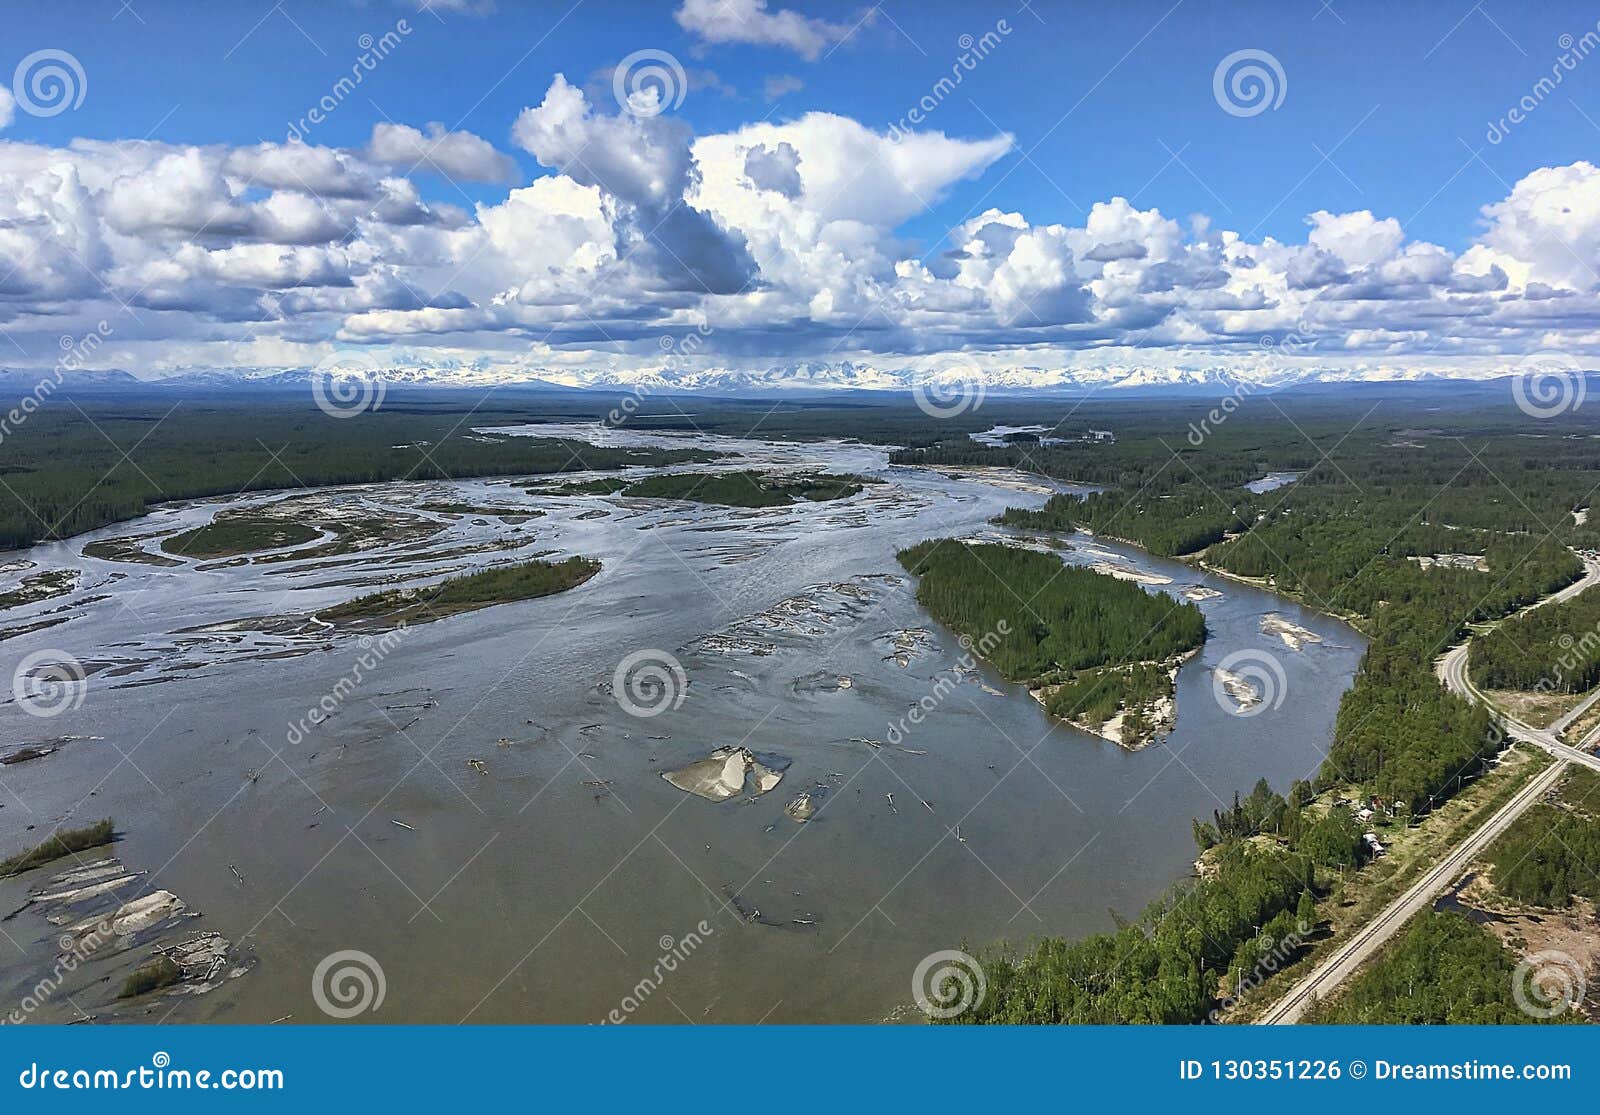 susitna river, alaska